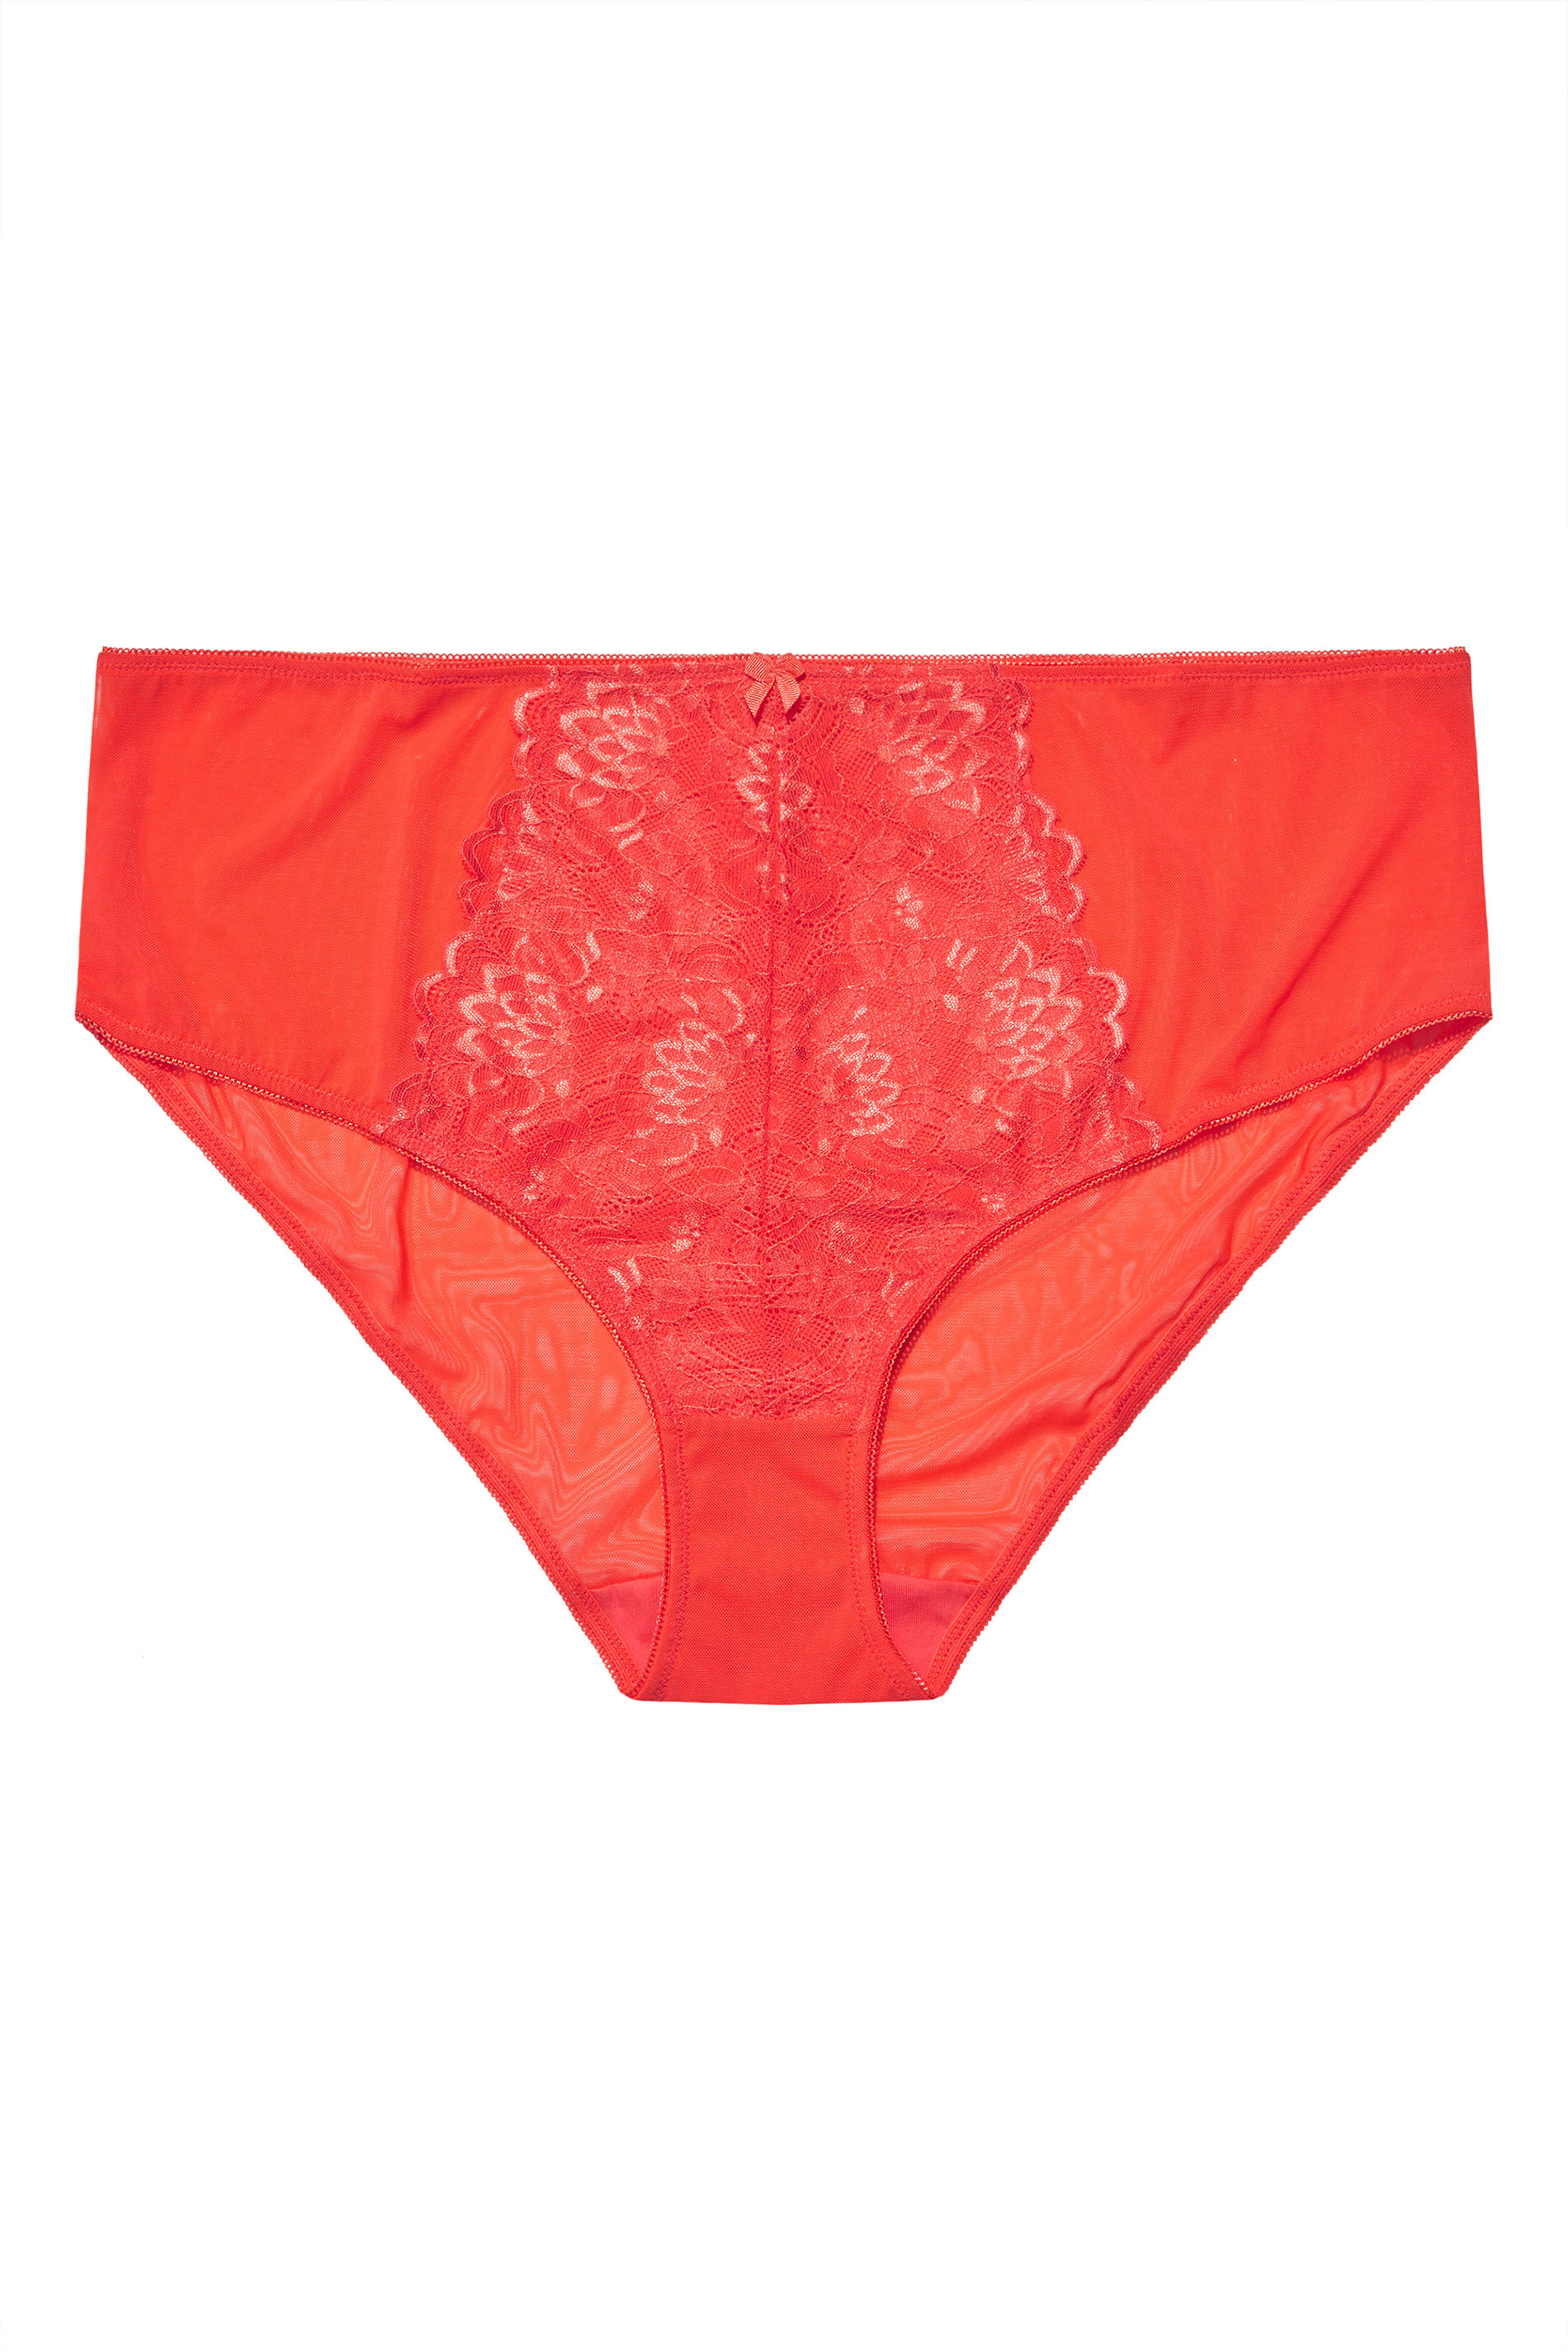 3x Ladies Briefs Knickers Dark Red Lace Top Briefs – Worsley_wear